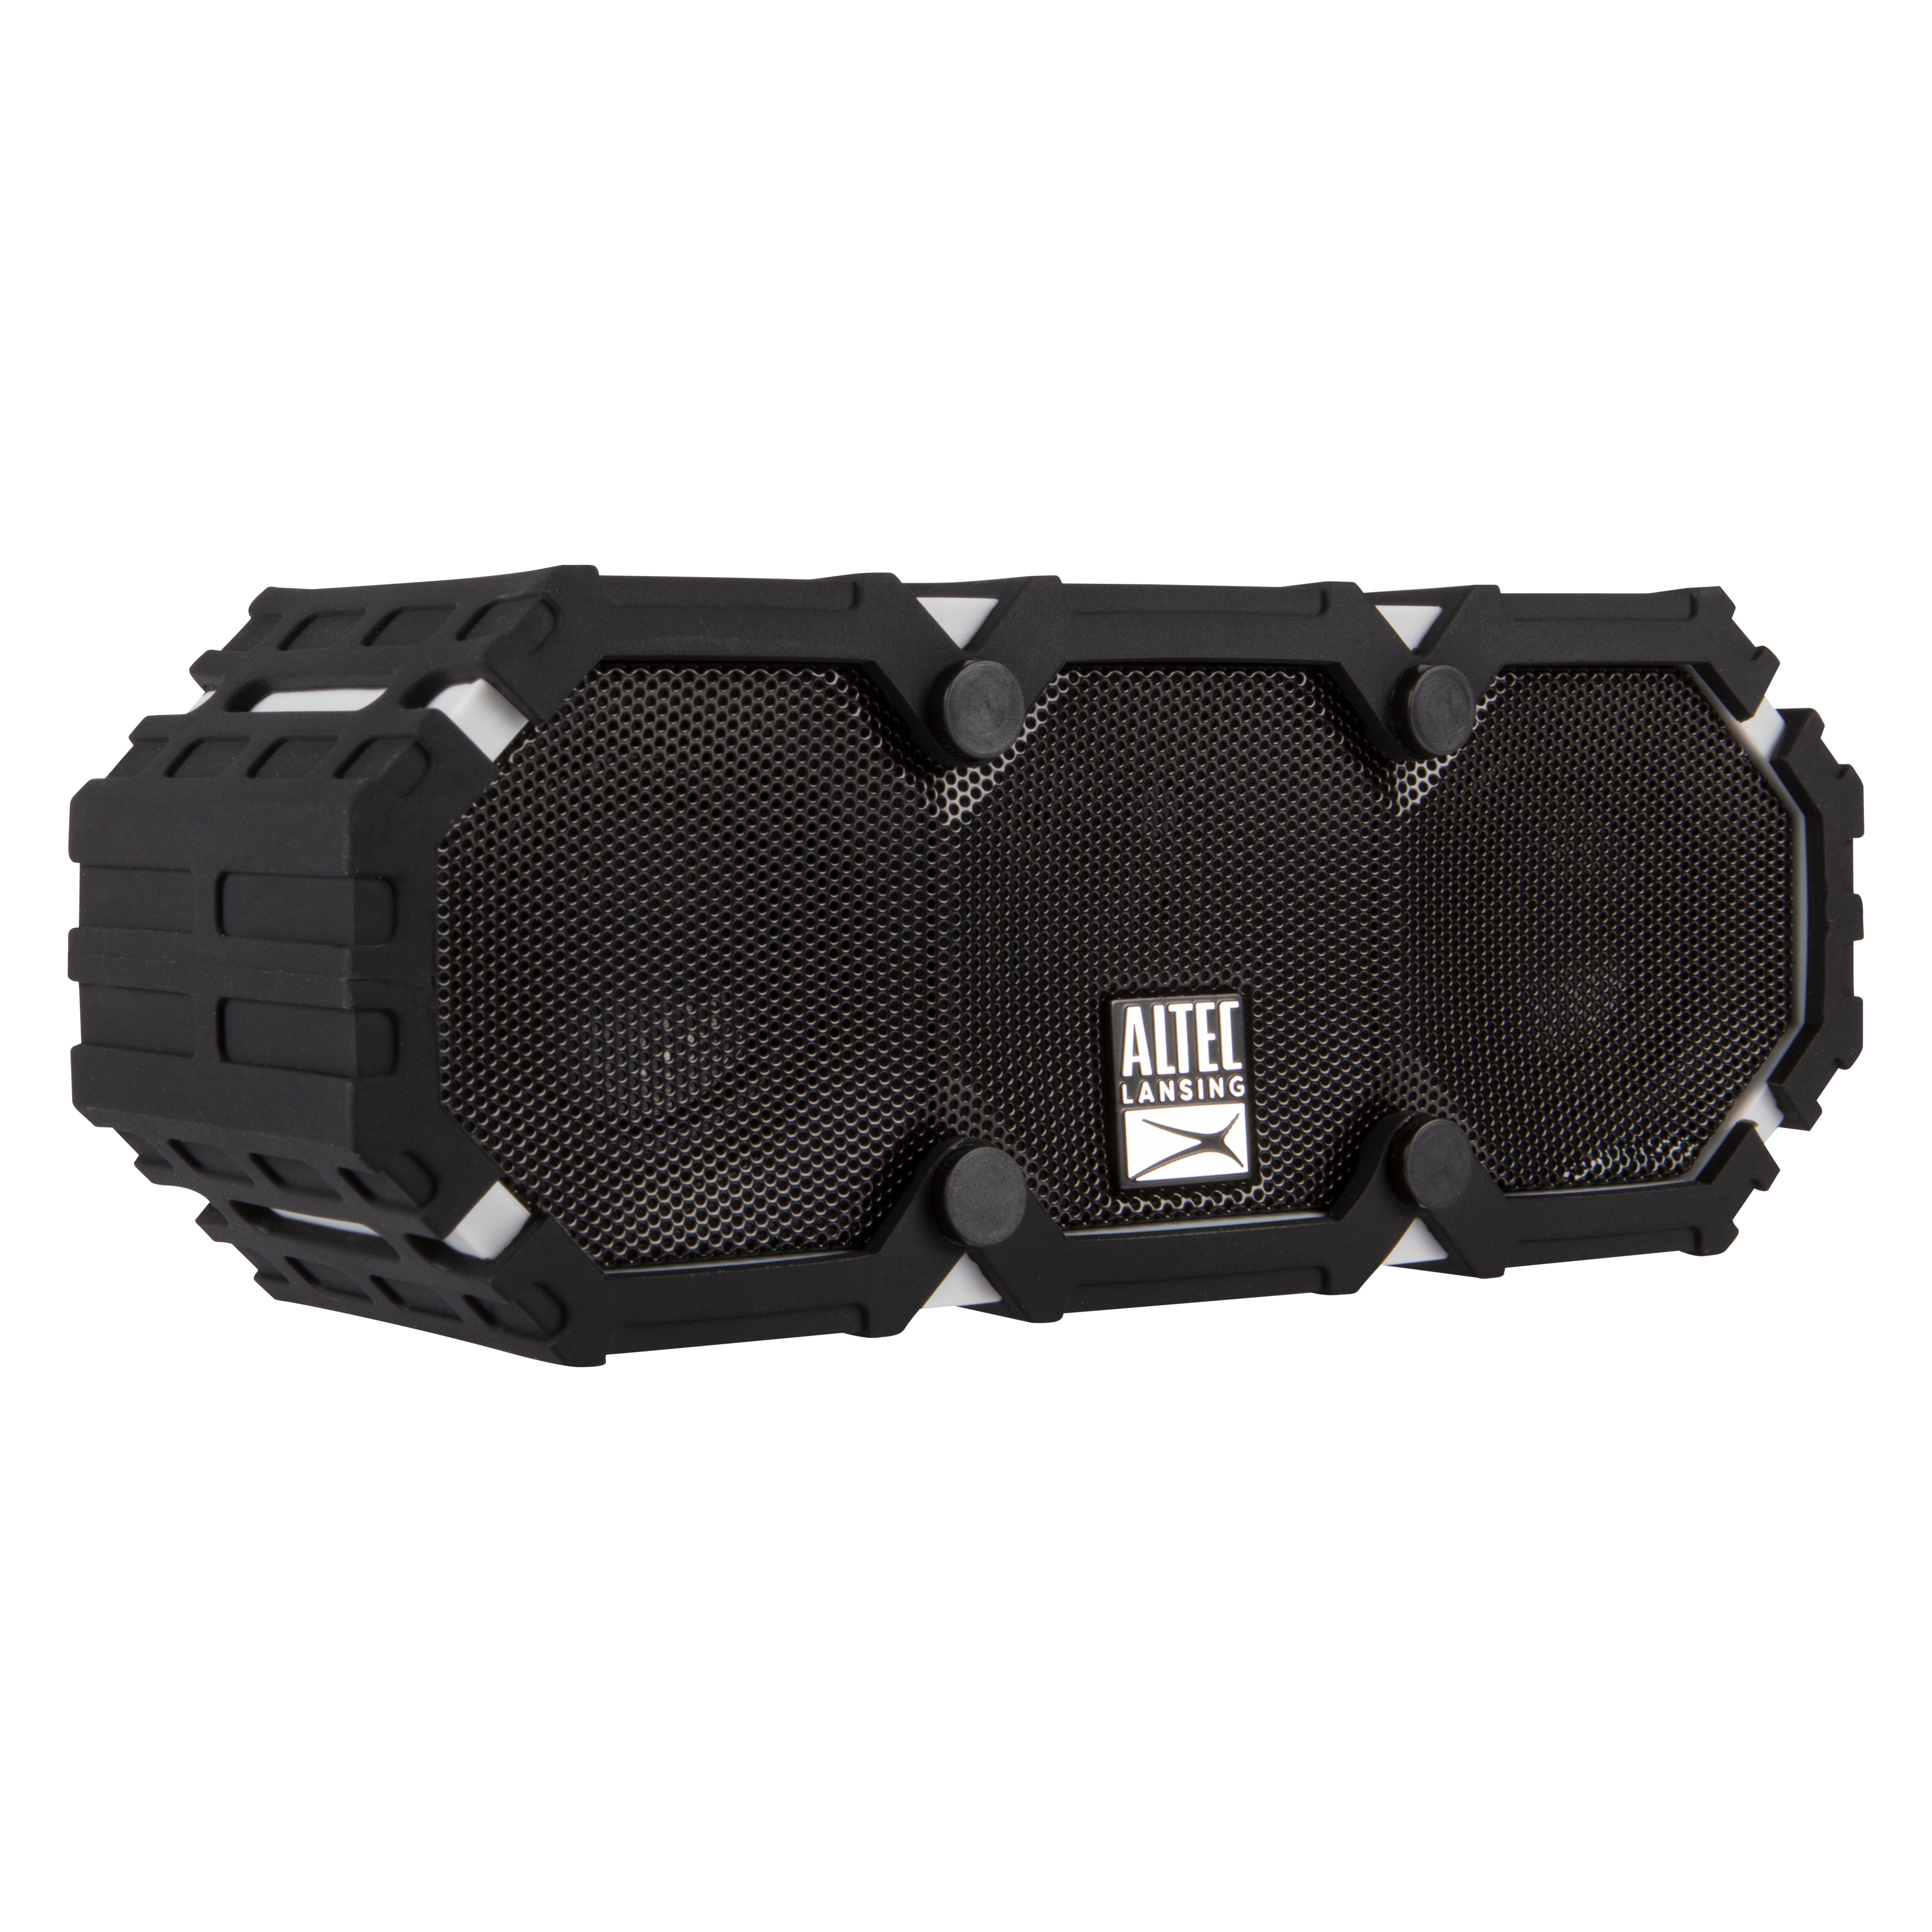 Altec Lansing iMW477 Mini Lifejacket Bluetooth Speaker - Gray - image 2 of 2